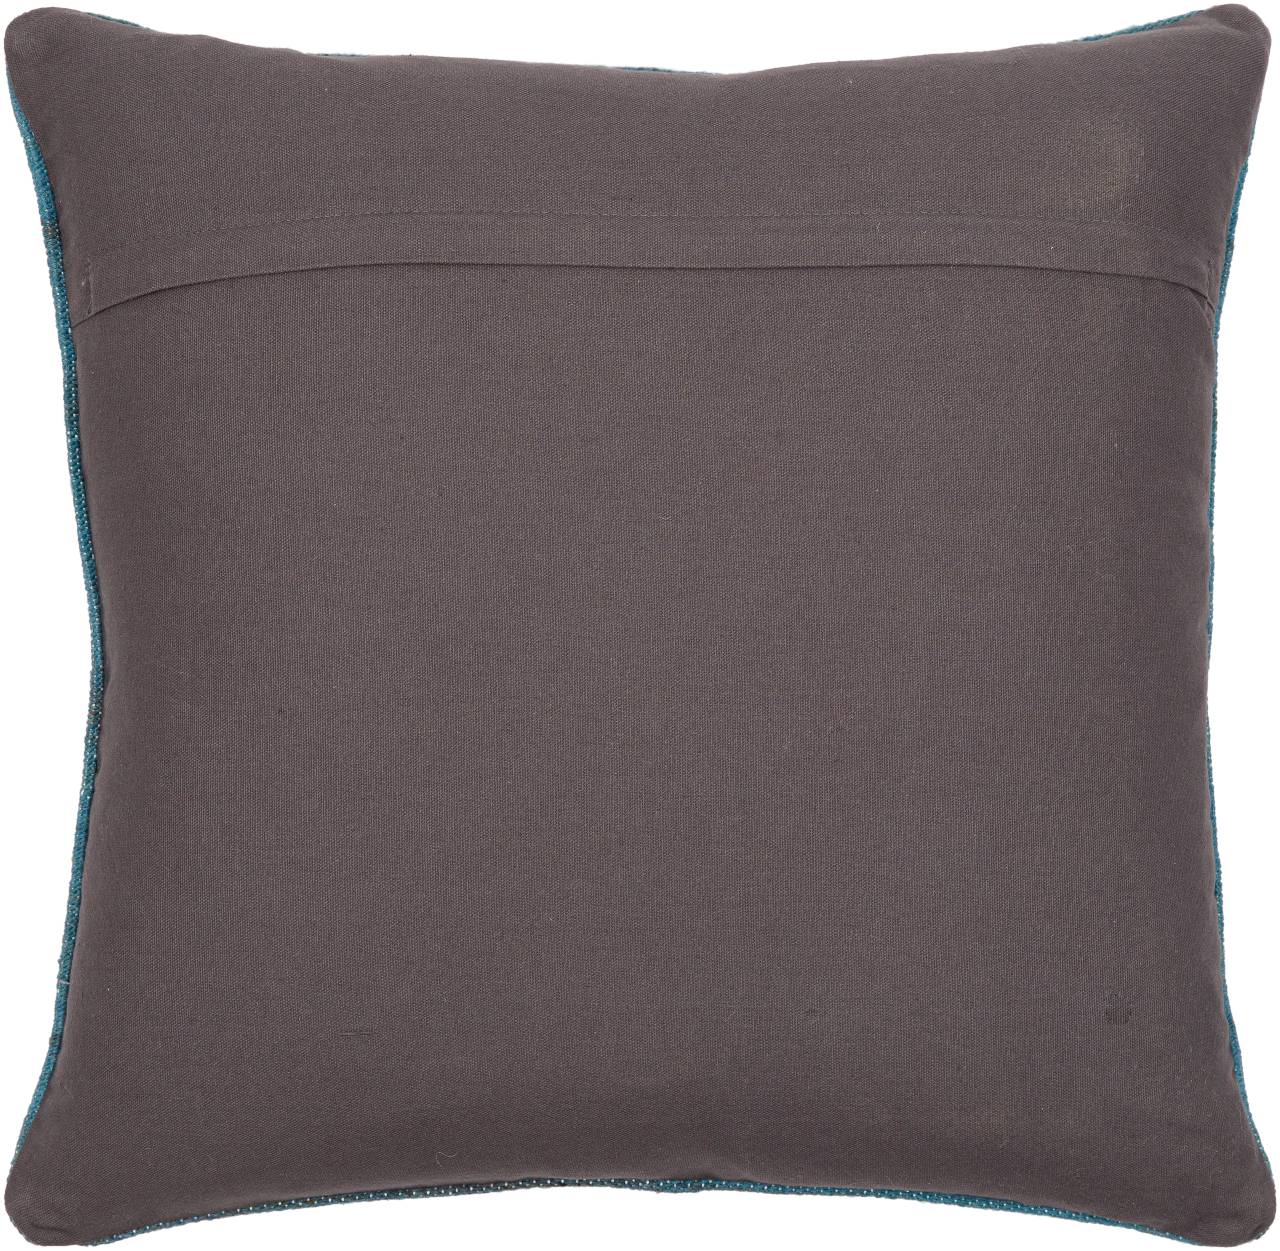 Altheim Teal Pillow Cover